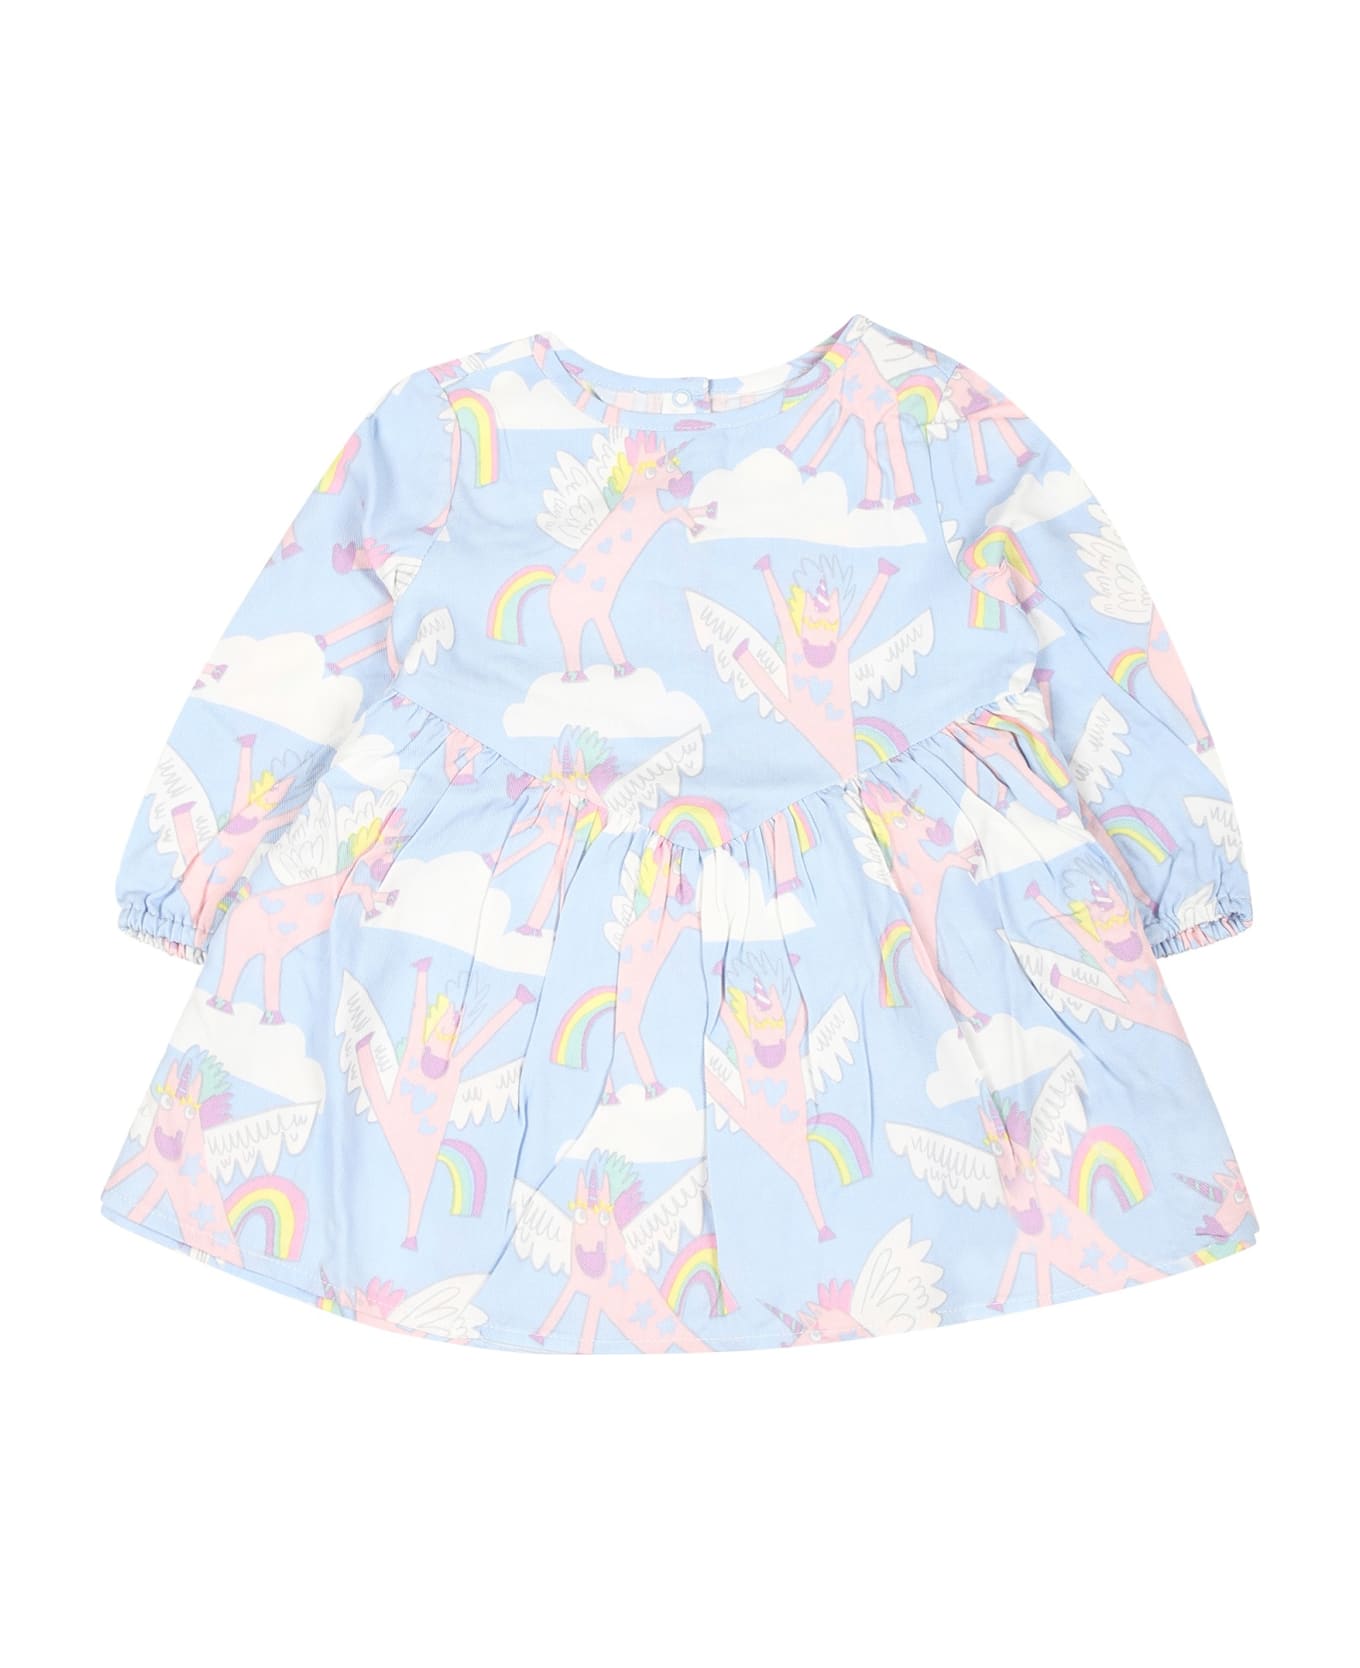 Stella McCartney Kids Light Blue Dress For Baby Girl With Unicorn - Light Blue